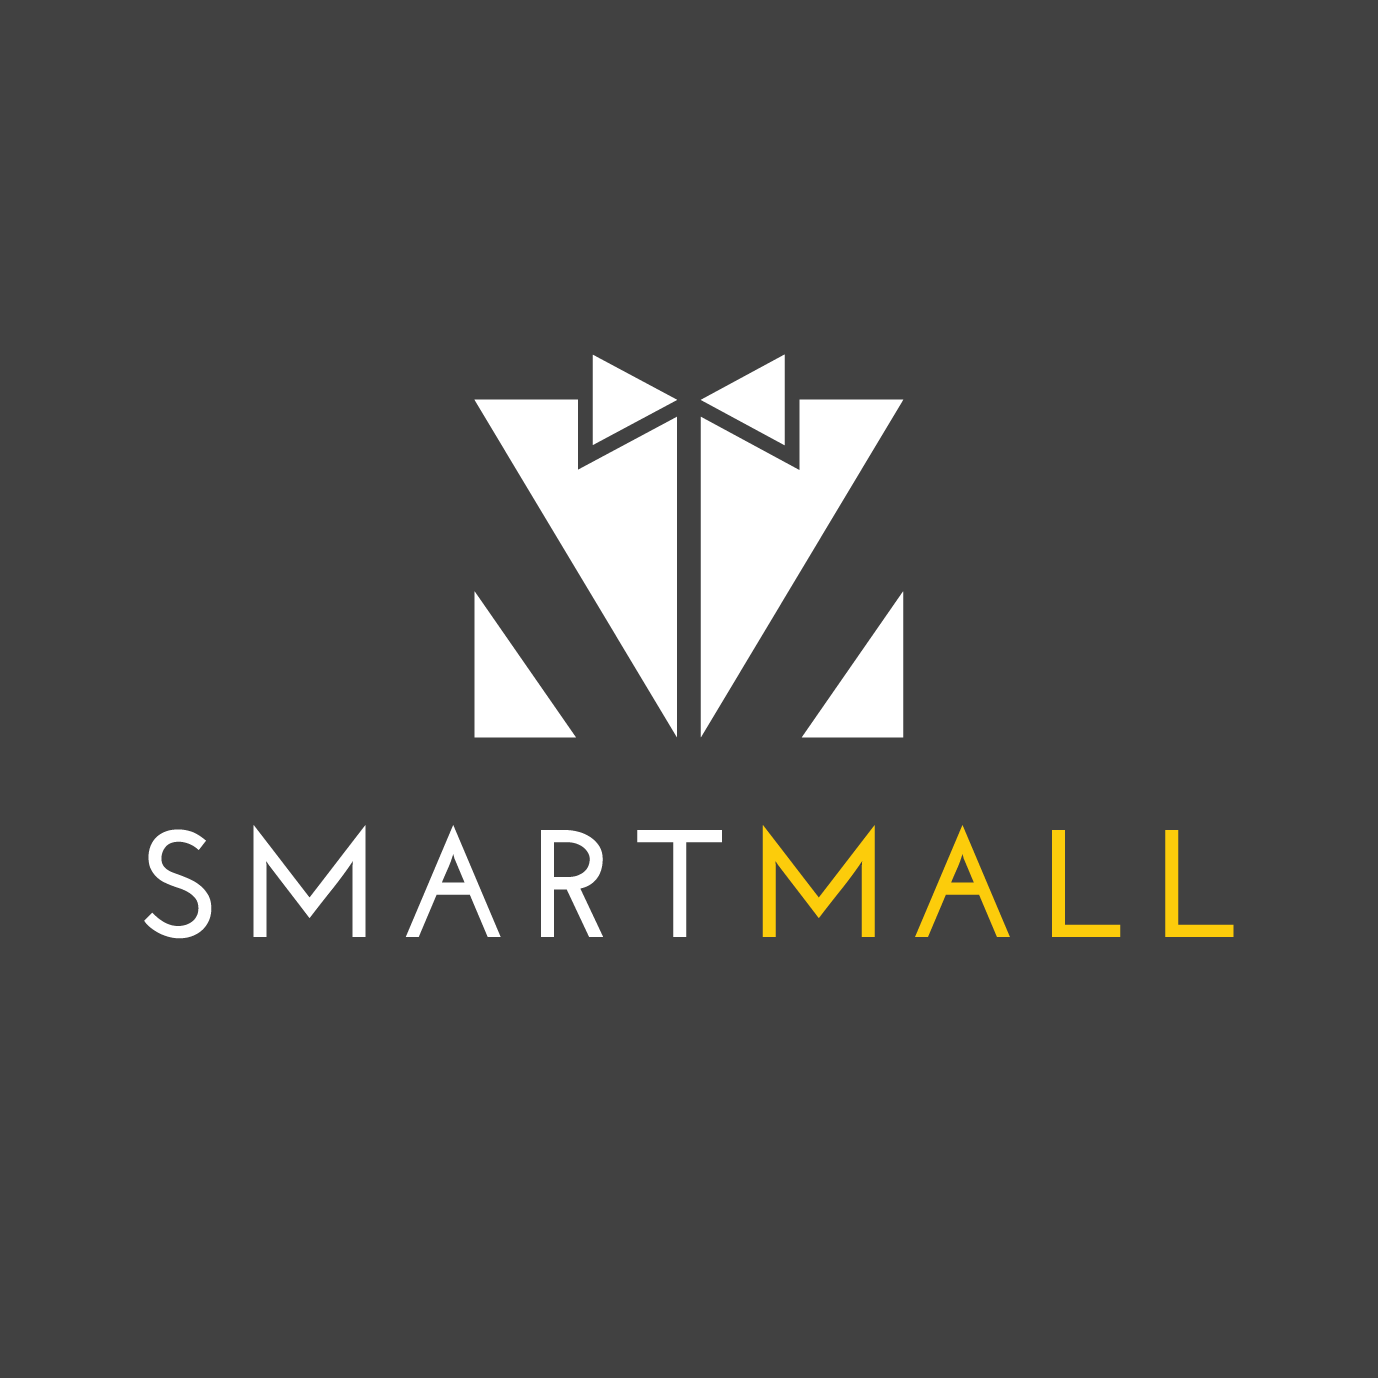 SmartMall Singapore